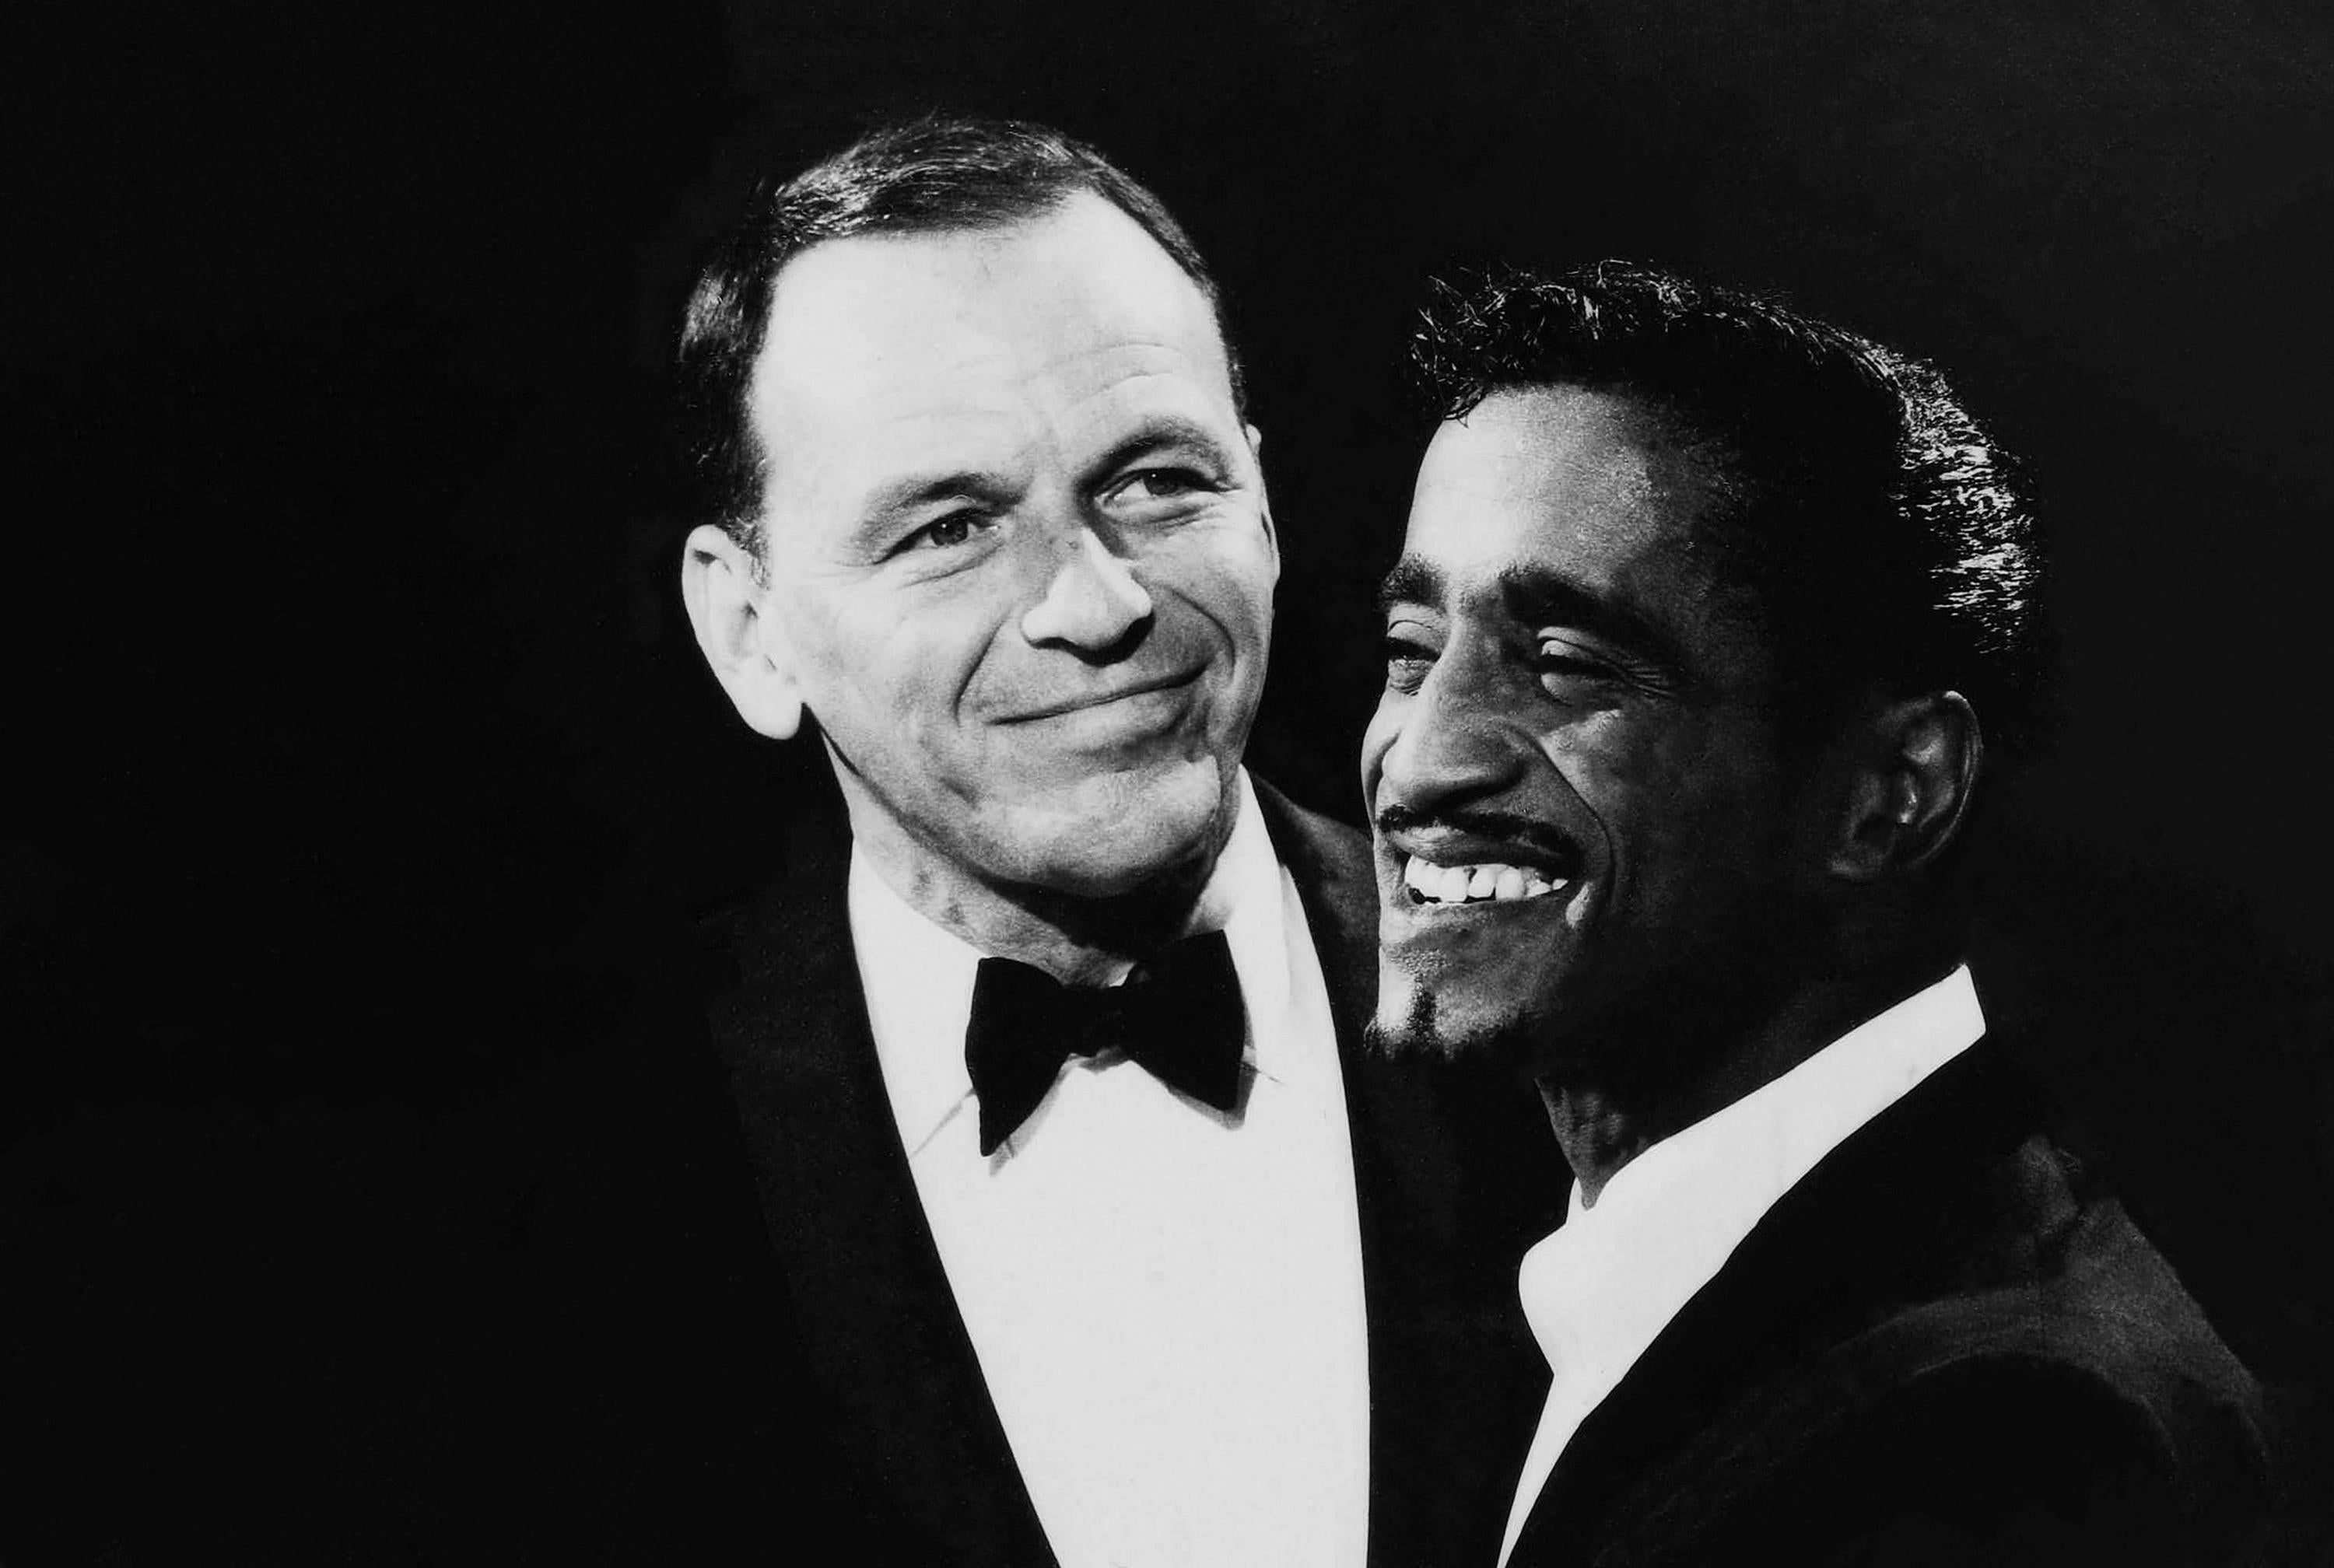 Unknown Black and White Photograph - Frank Sinatra and Sammy Davis Jr. Smiling Globe Photos Fine Art Print